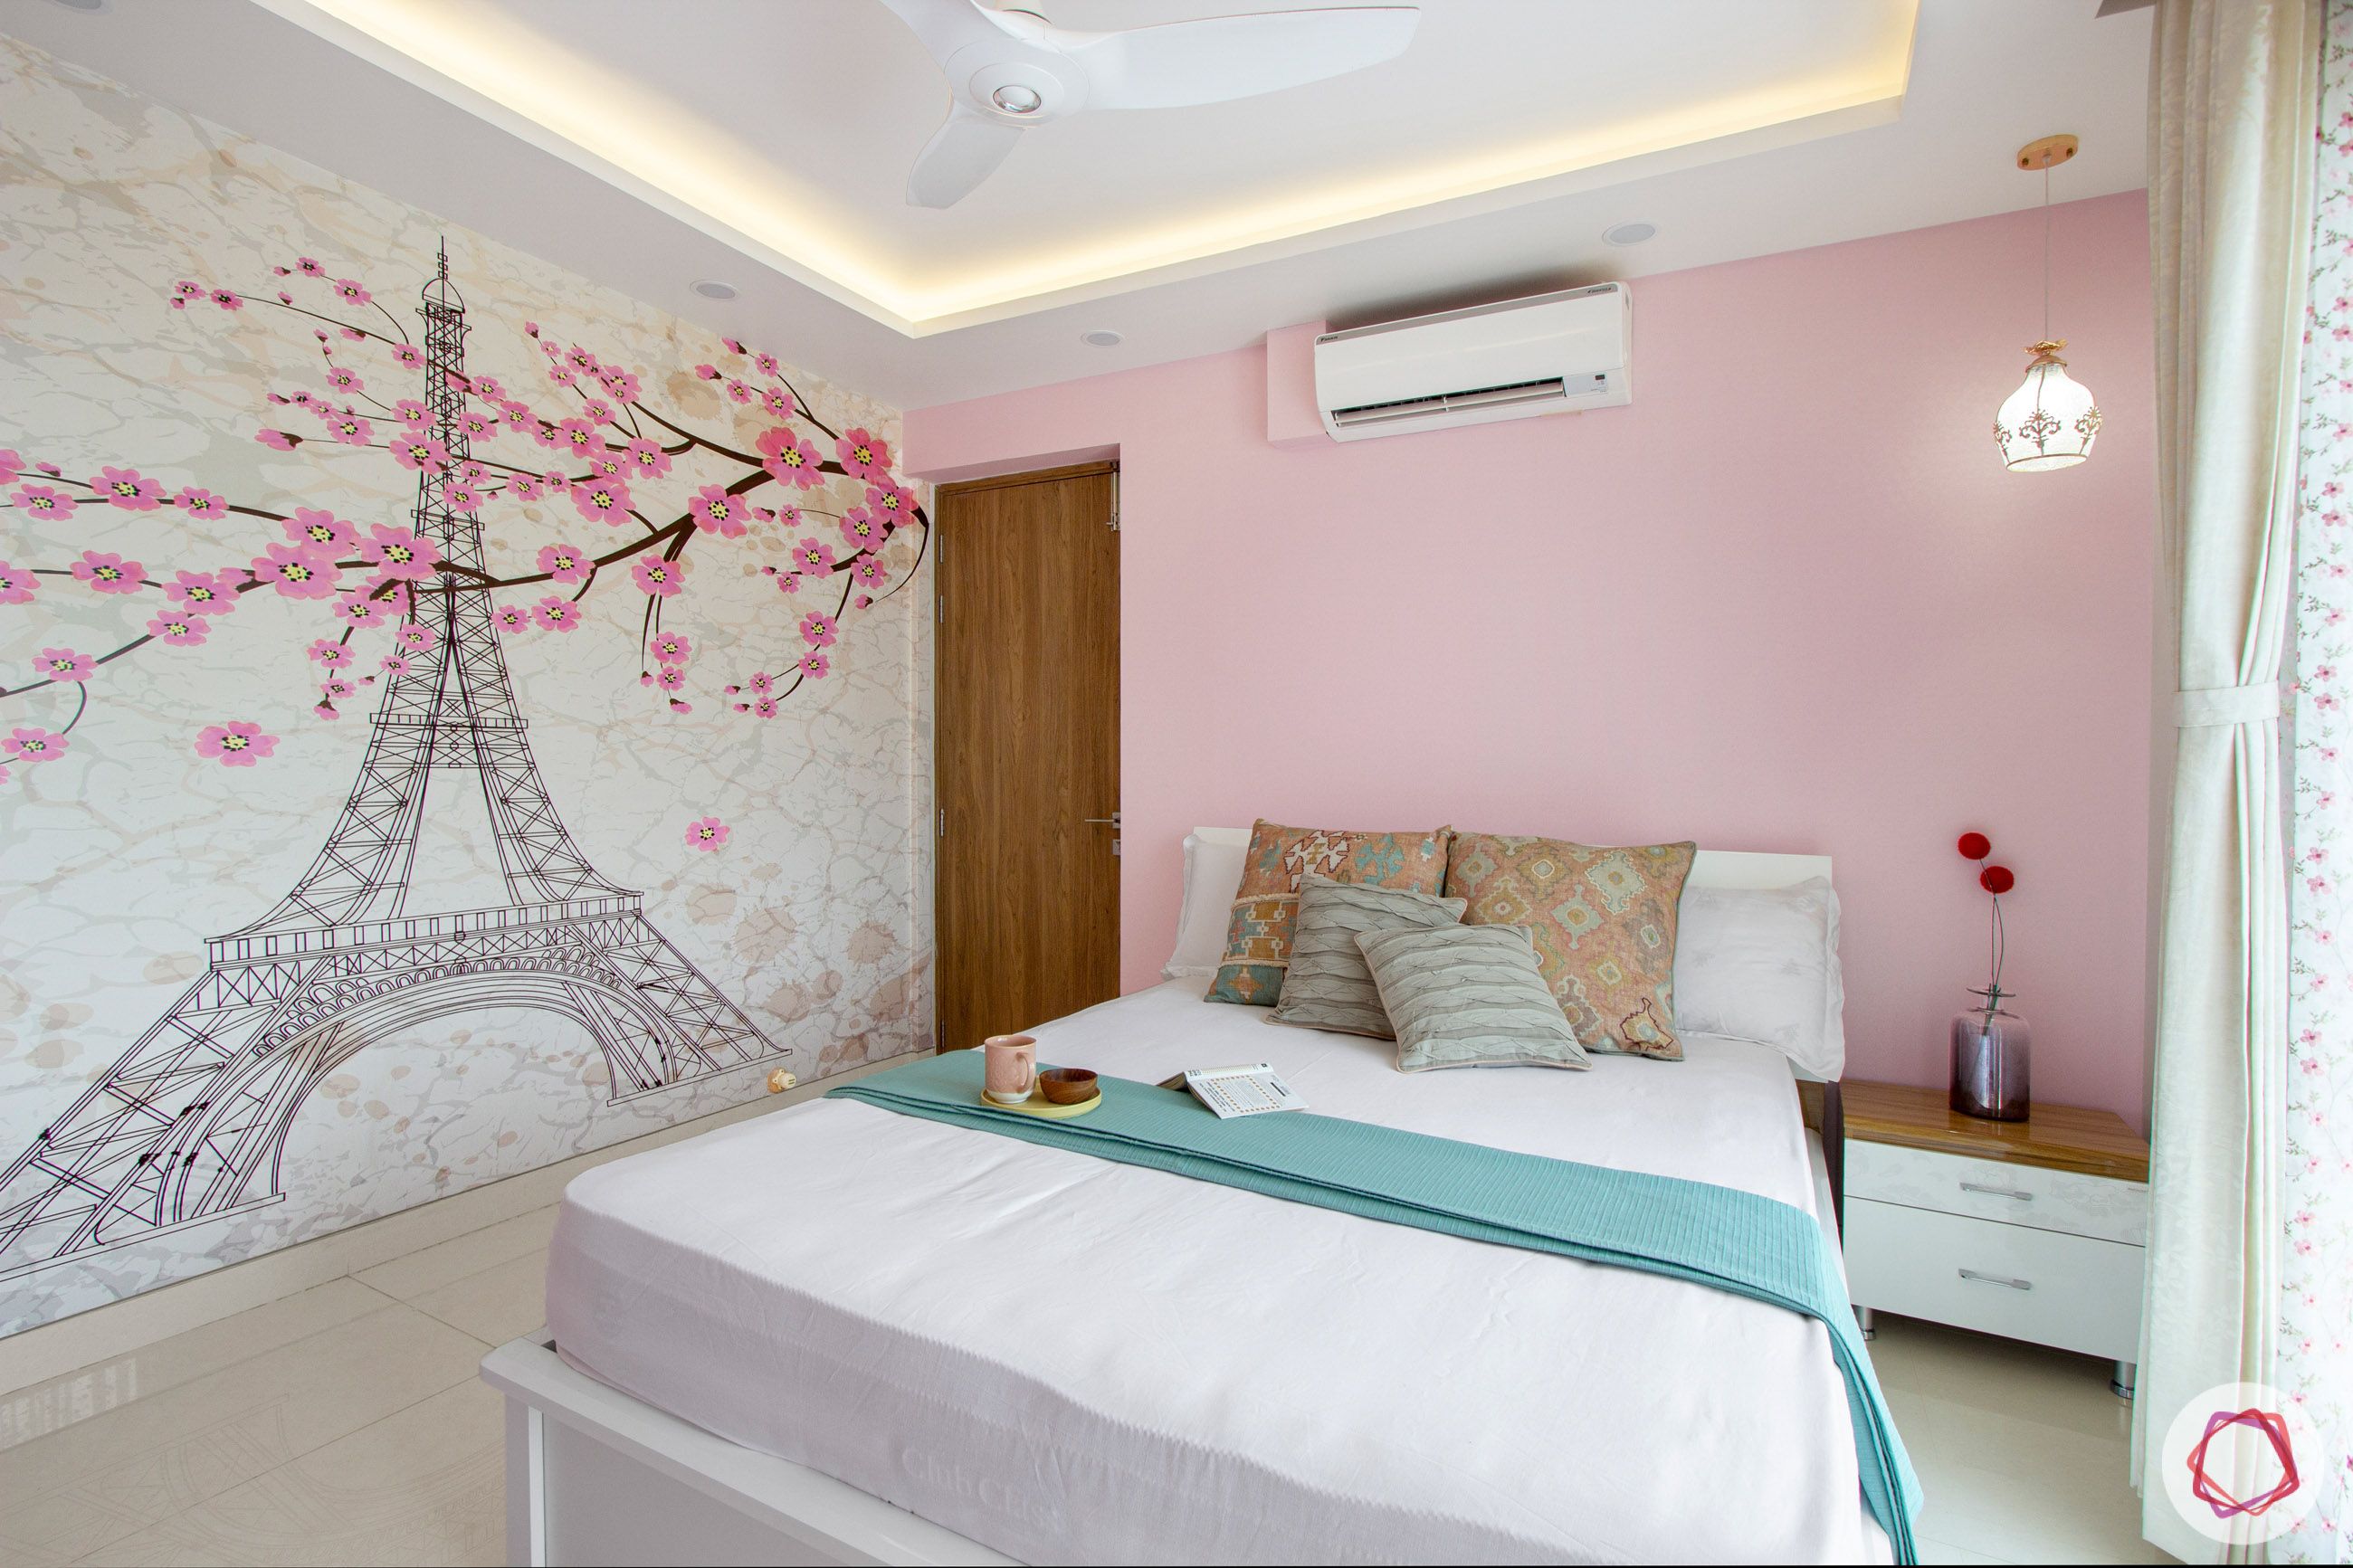 snn-raj-grandeur-girls bedroom-paris theme wallpaper